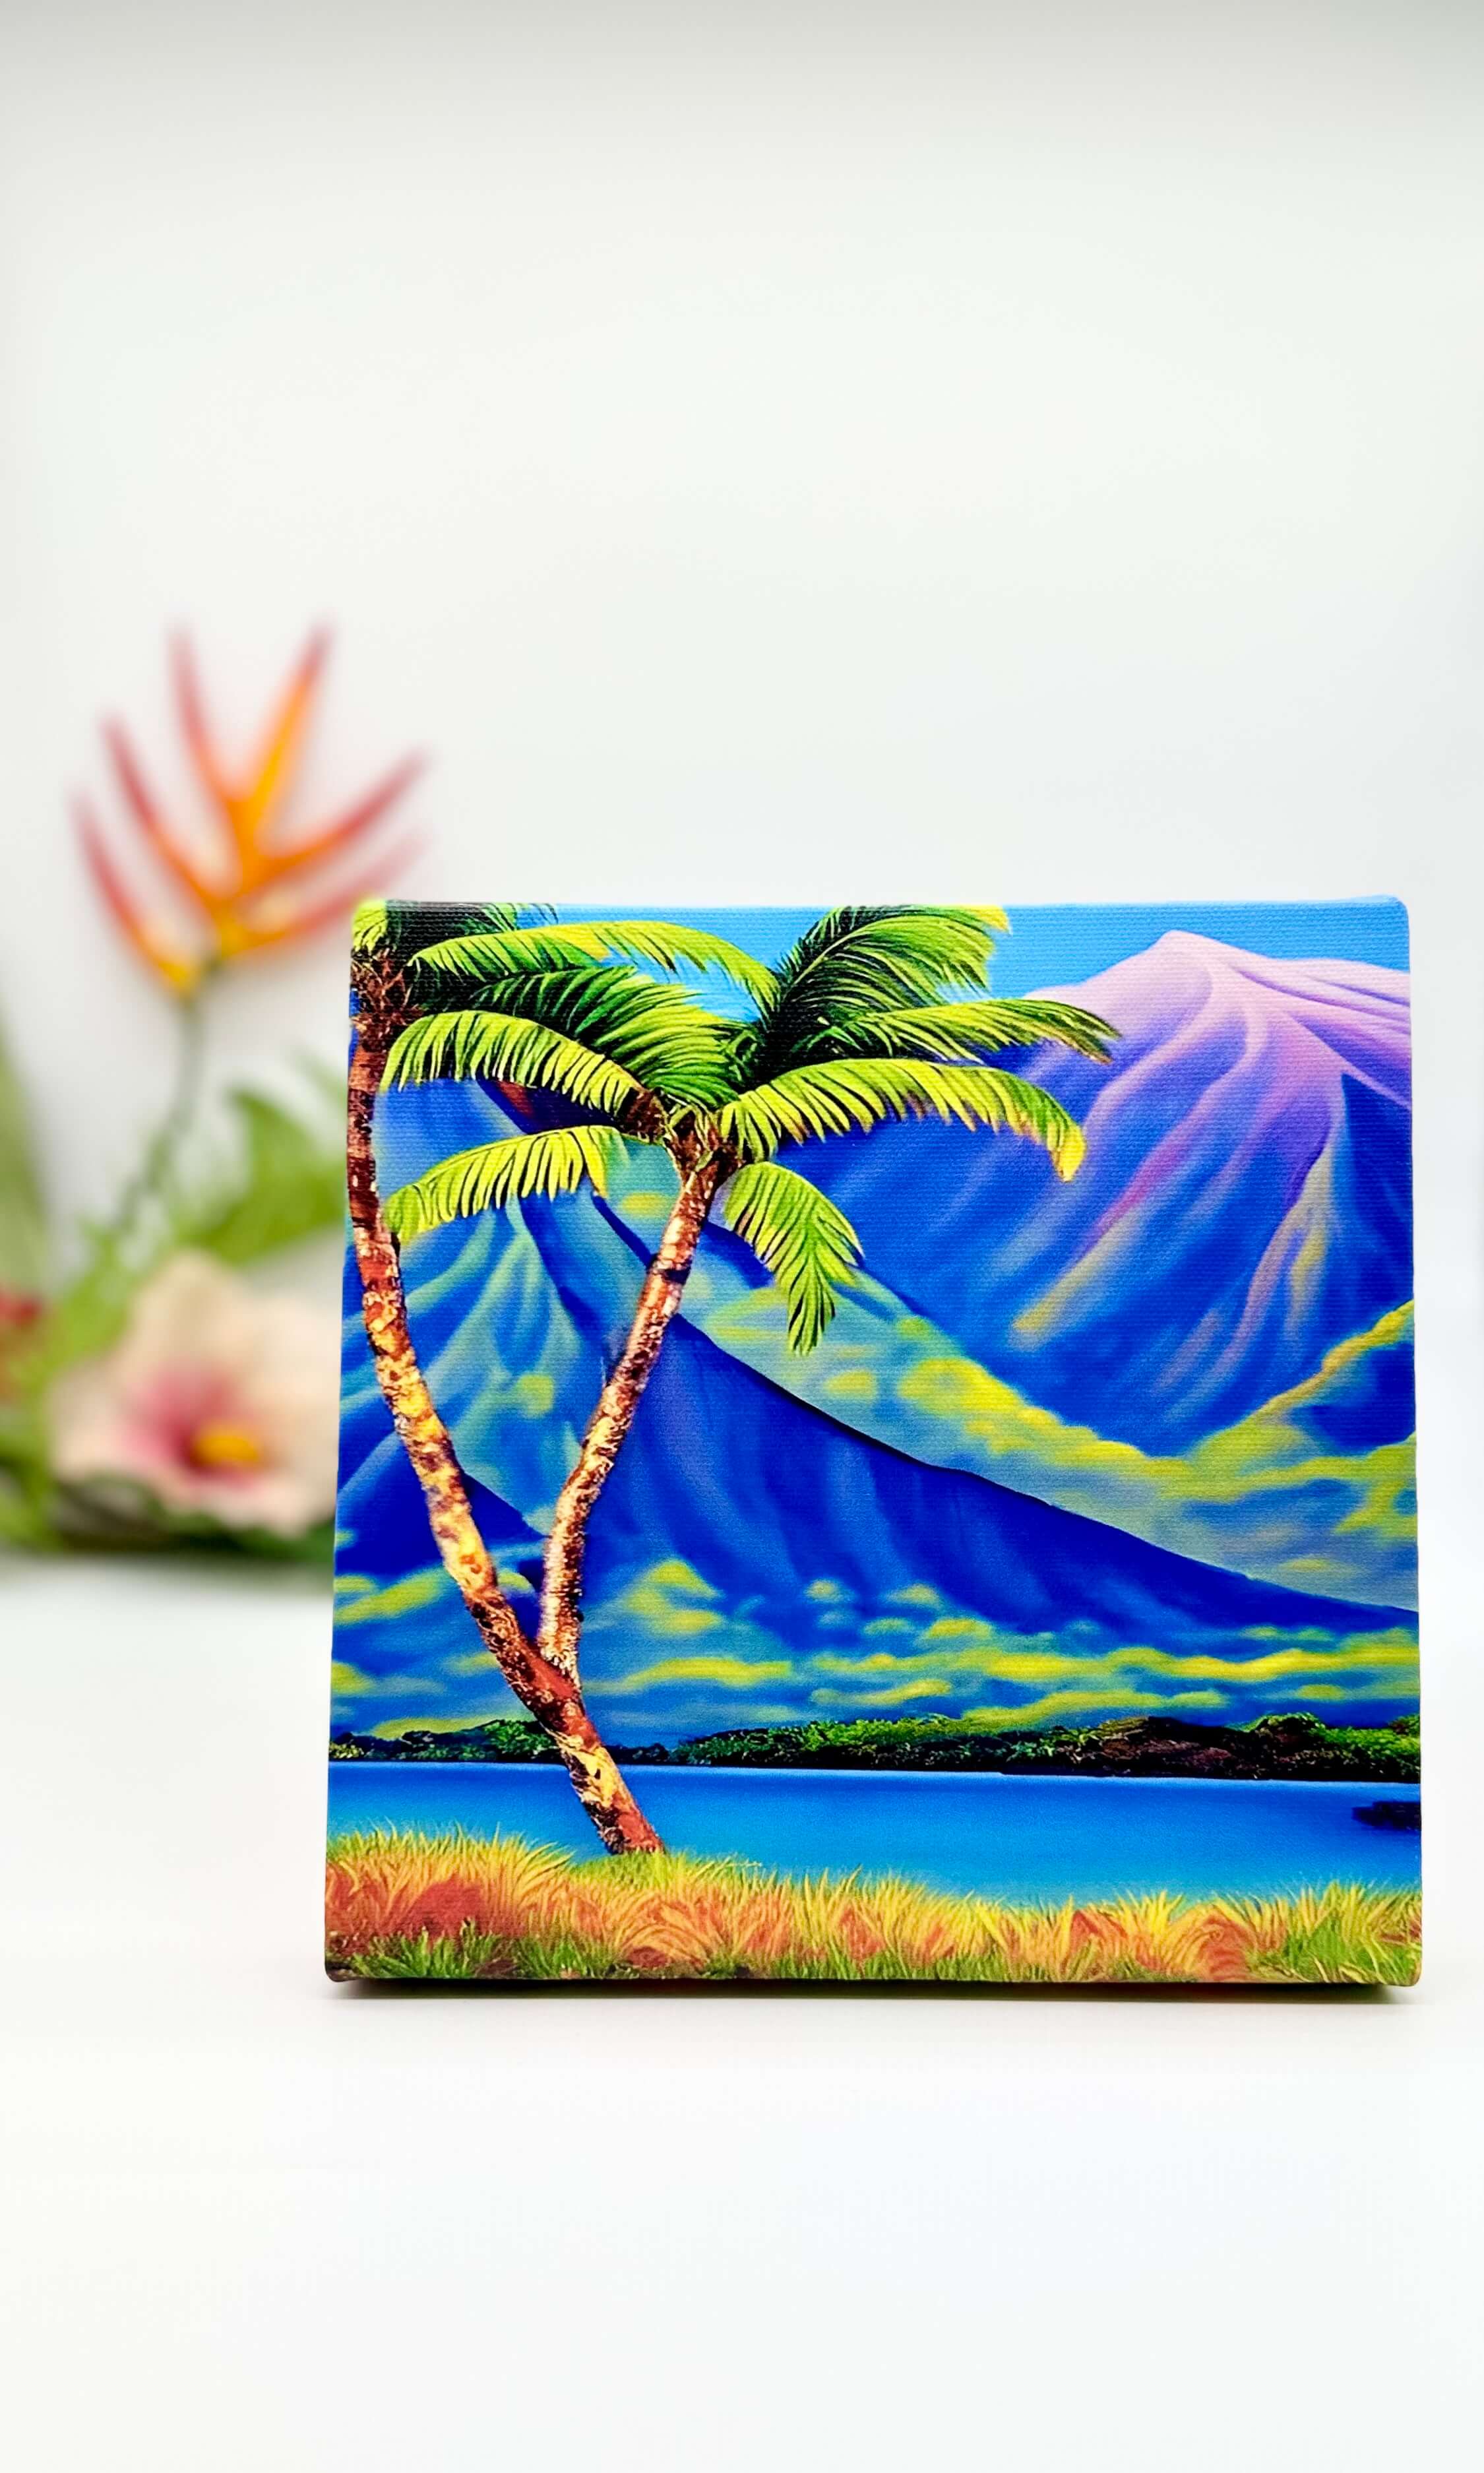 8x8 Canvas Print - Mountain and Ocean Bay